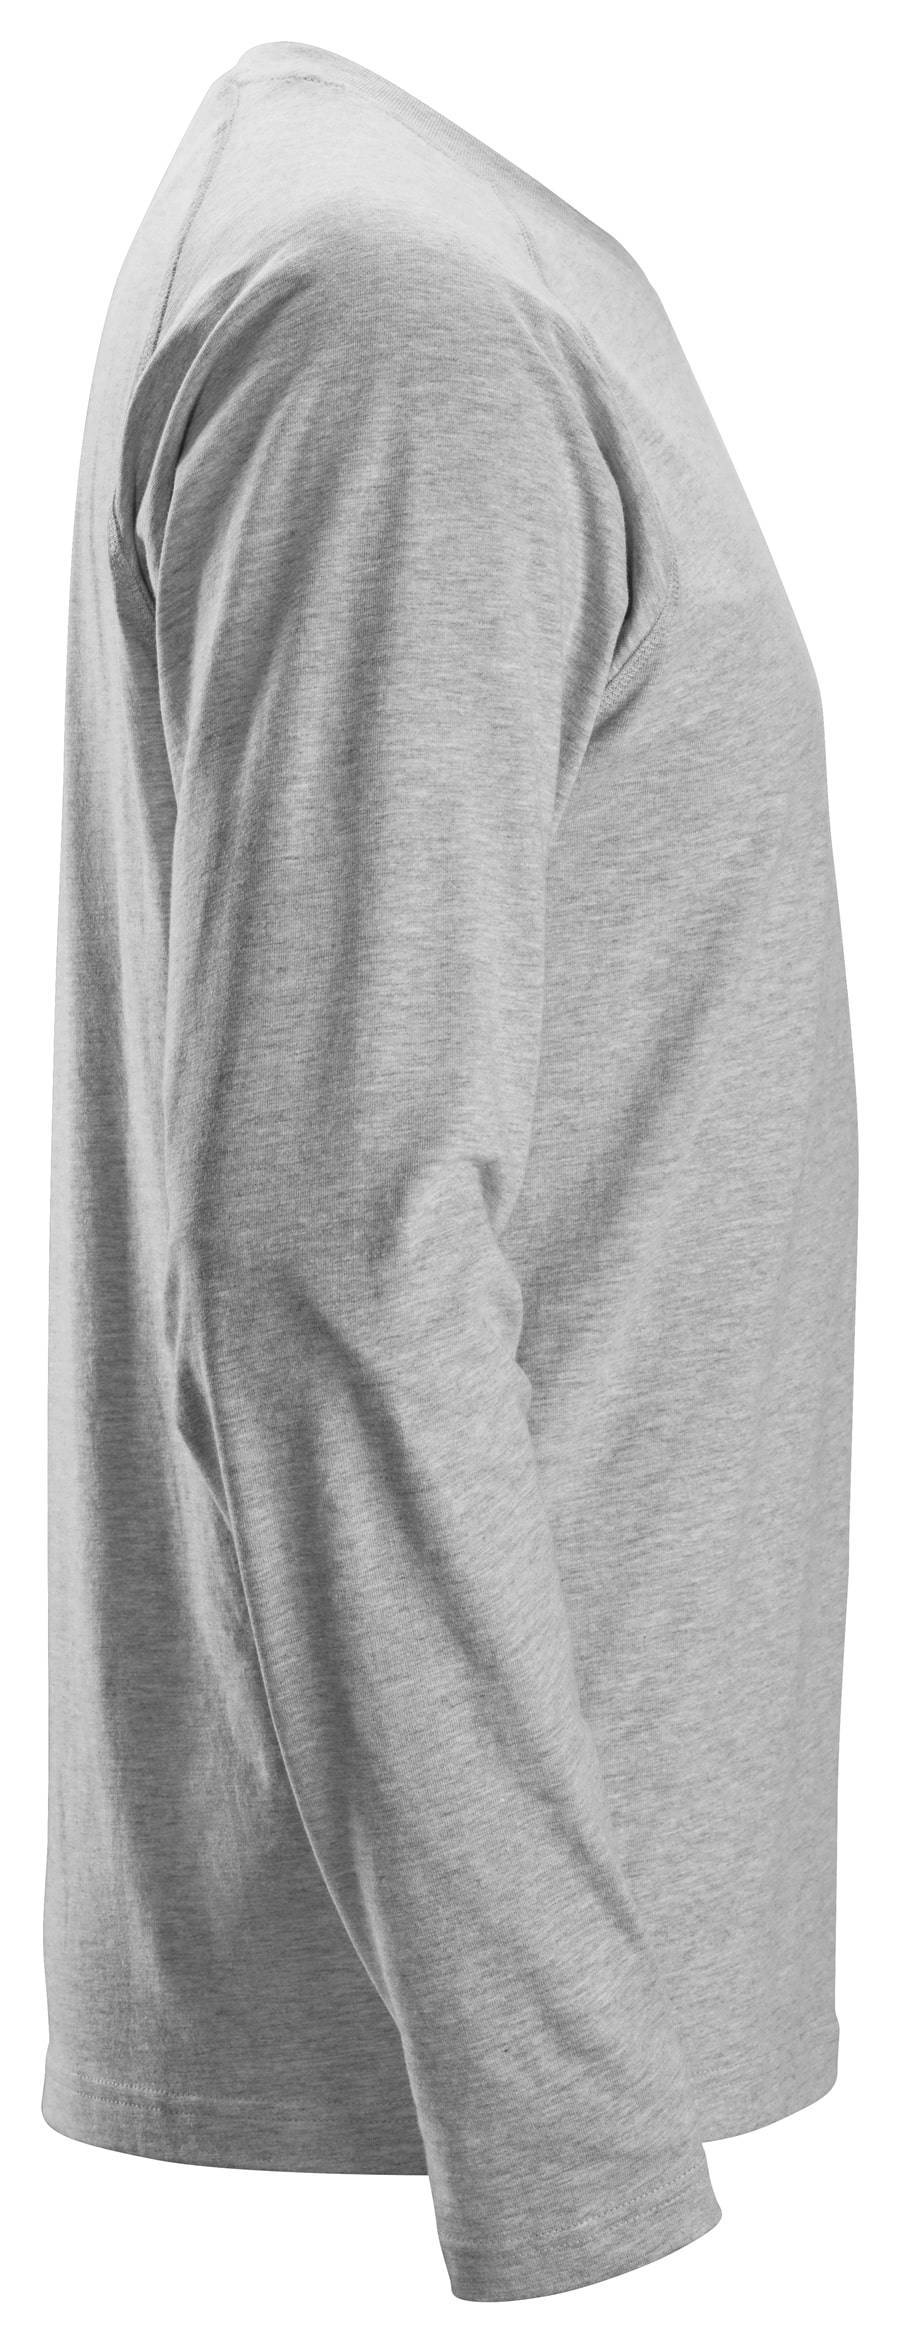 T-shirt Snickers Workwear AllroundWork maniche lunghe - Immagine 3